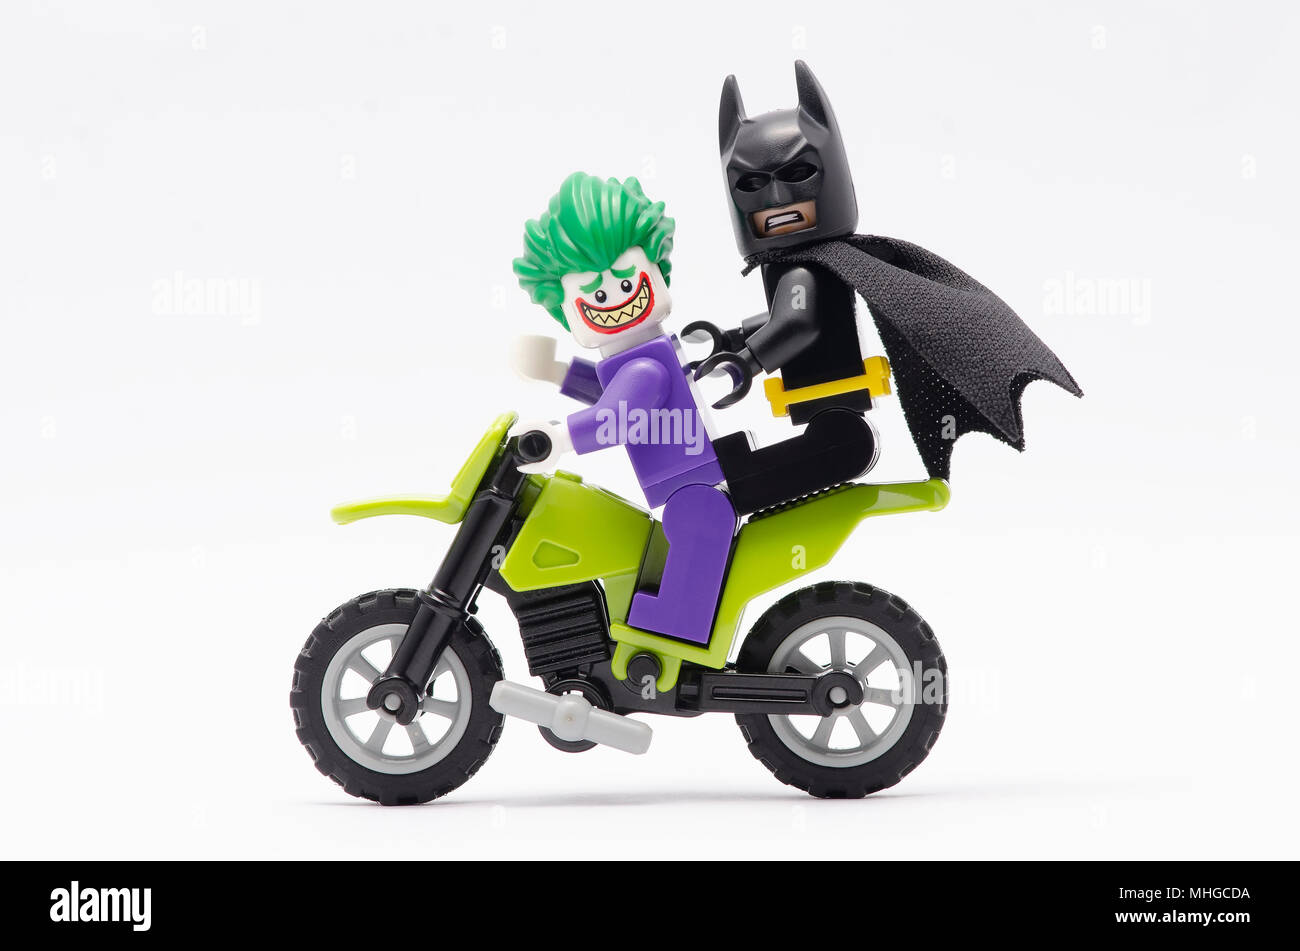 Joker Lego Batman High Resolution Stock Photography and Images - Alamy